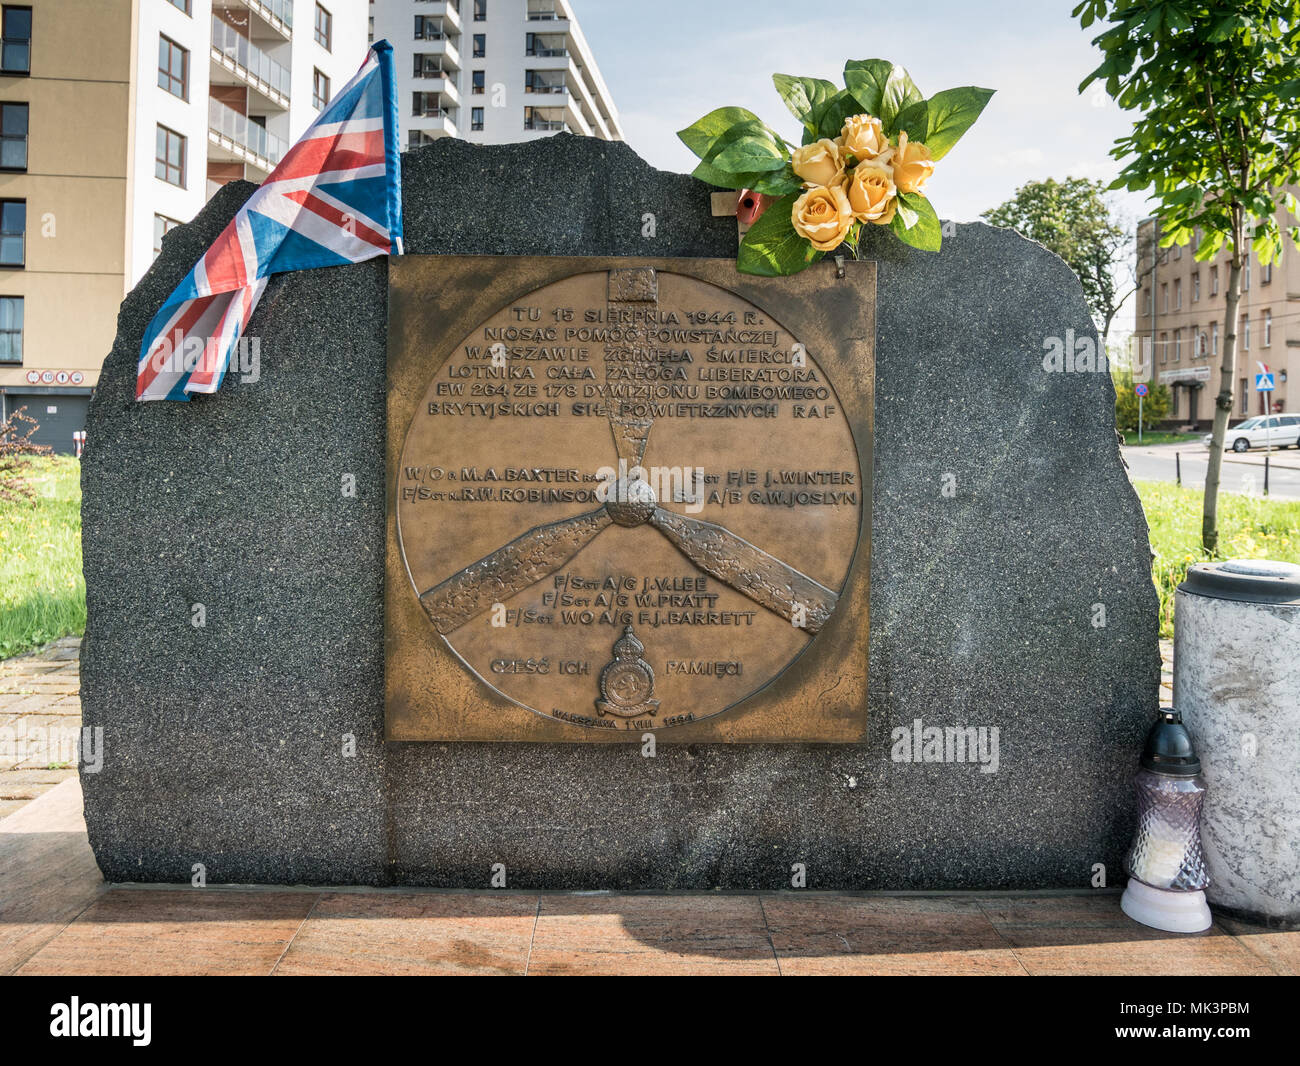 Memorial stone commemorating victims of Liberator crash during WW2, Warsaw, Poland Stock Photo